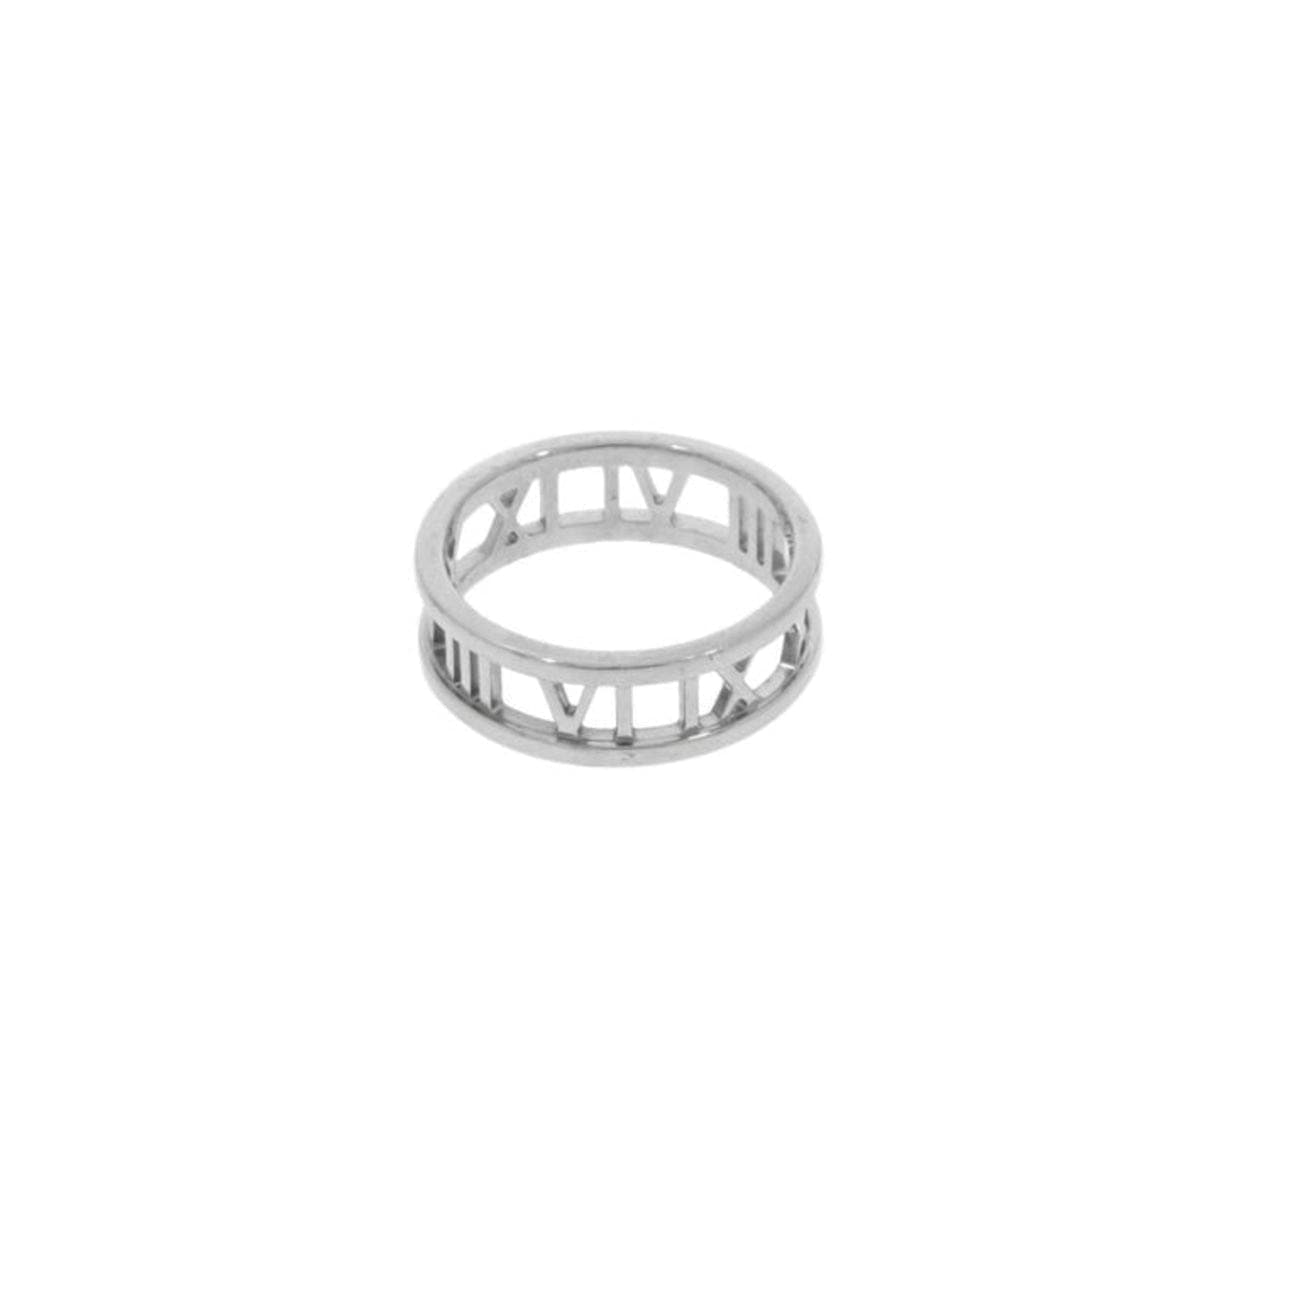 Tiffany & Co. Atlas Roman Numeral Band Ring